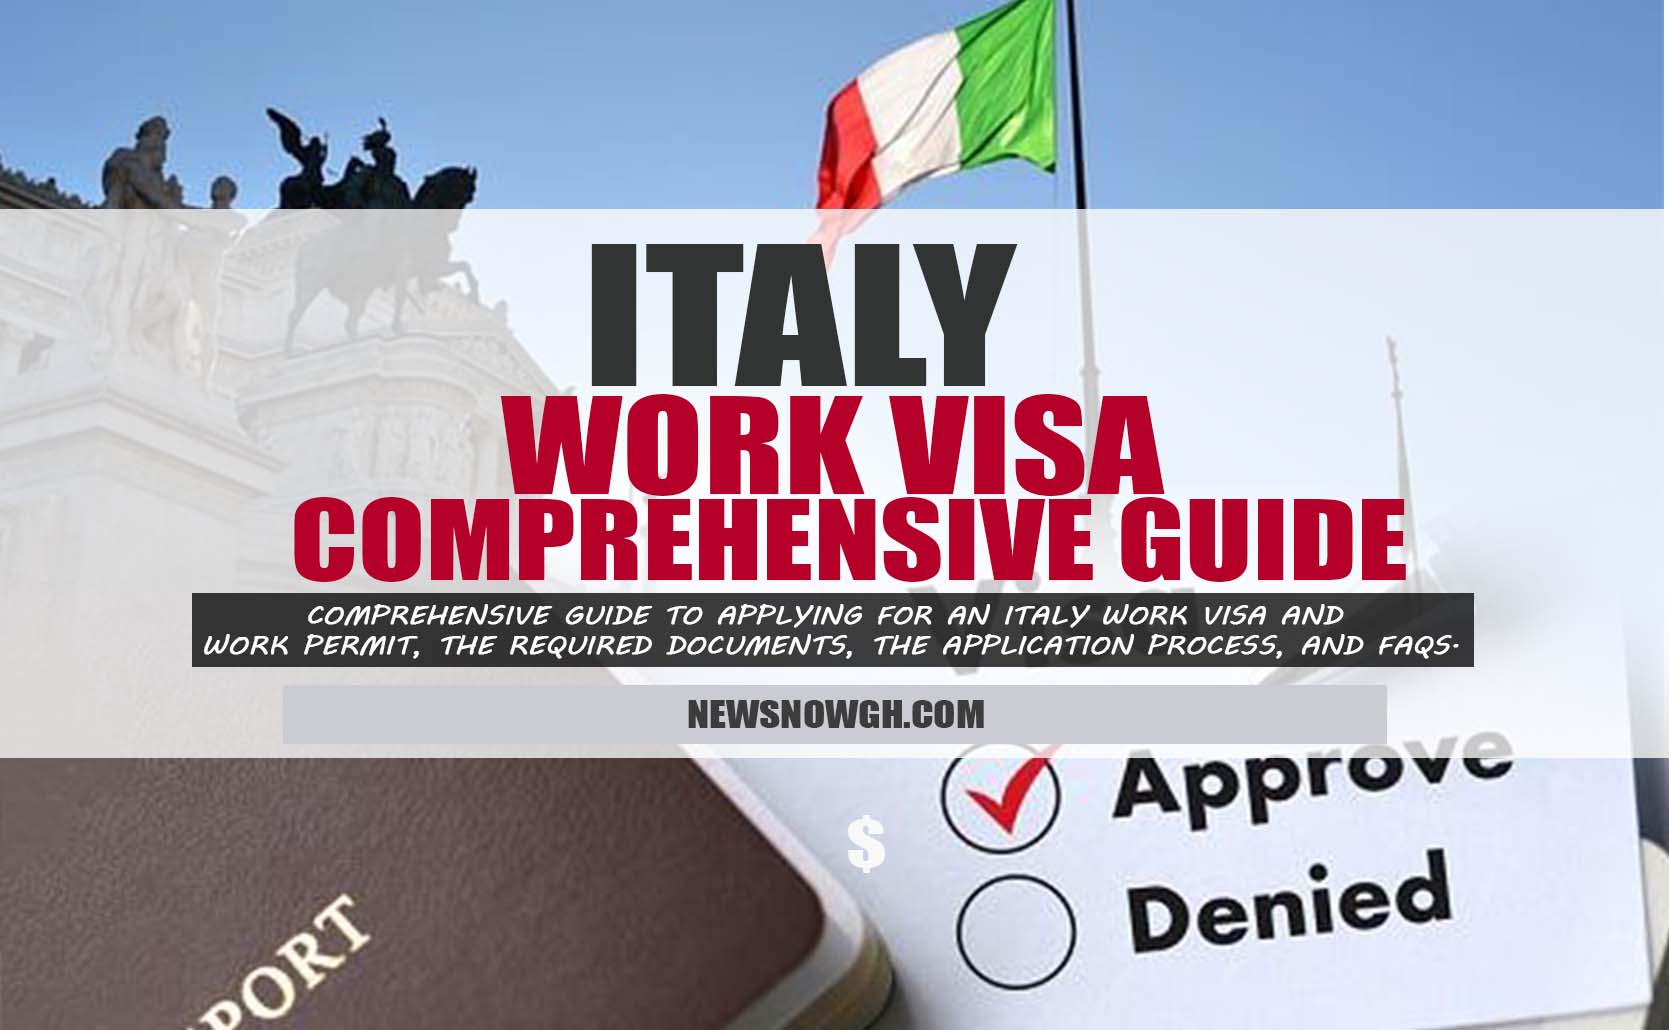 Italy Work Visa Comprehensive Guide